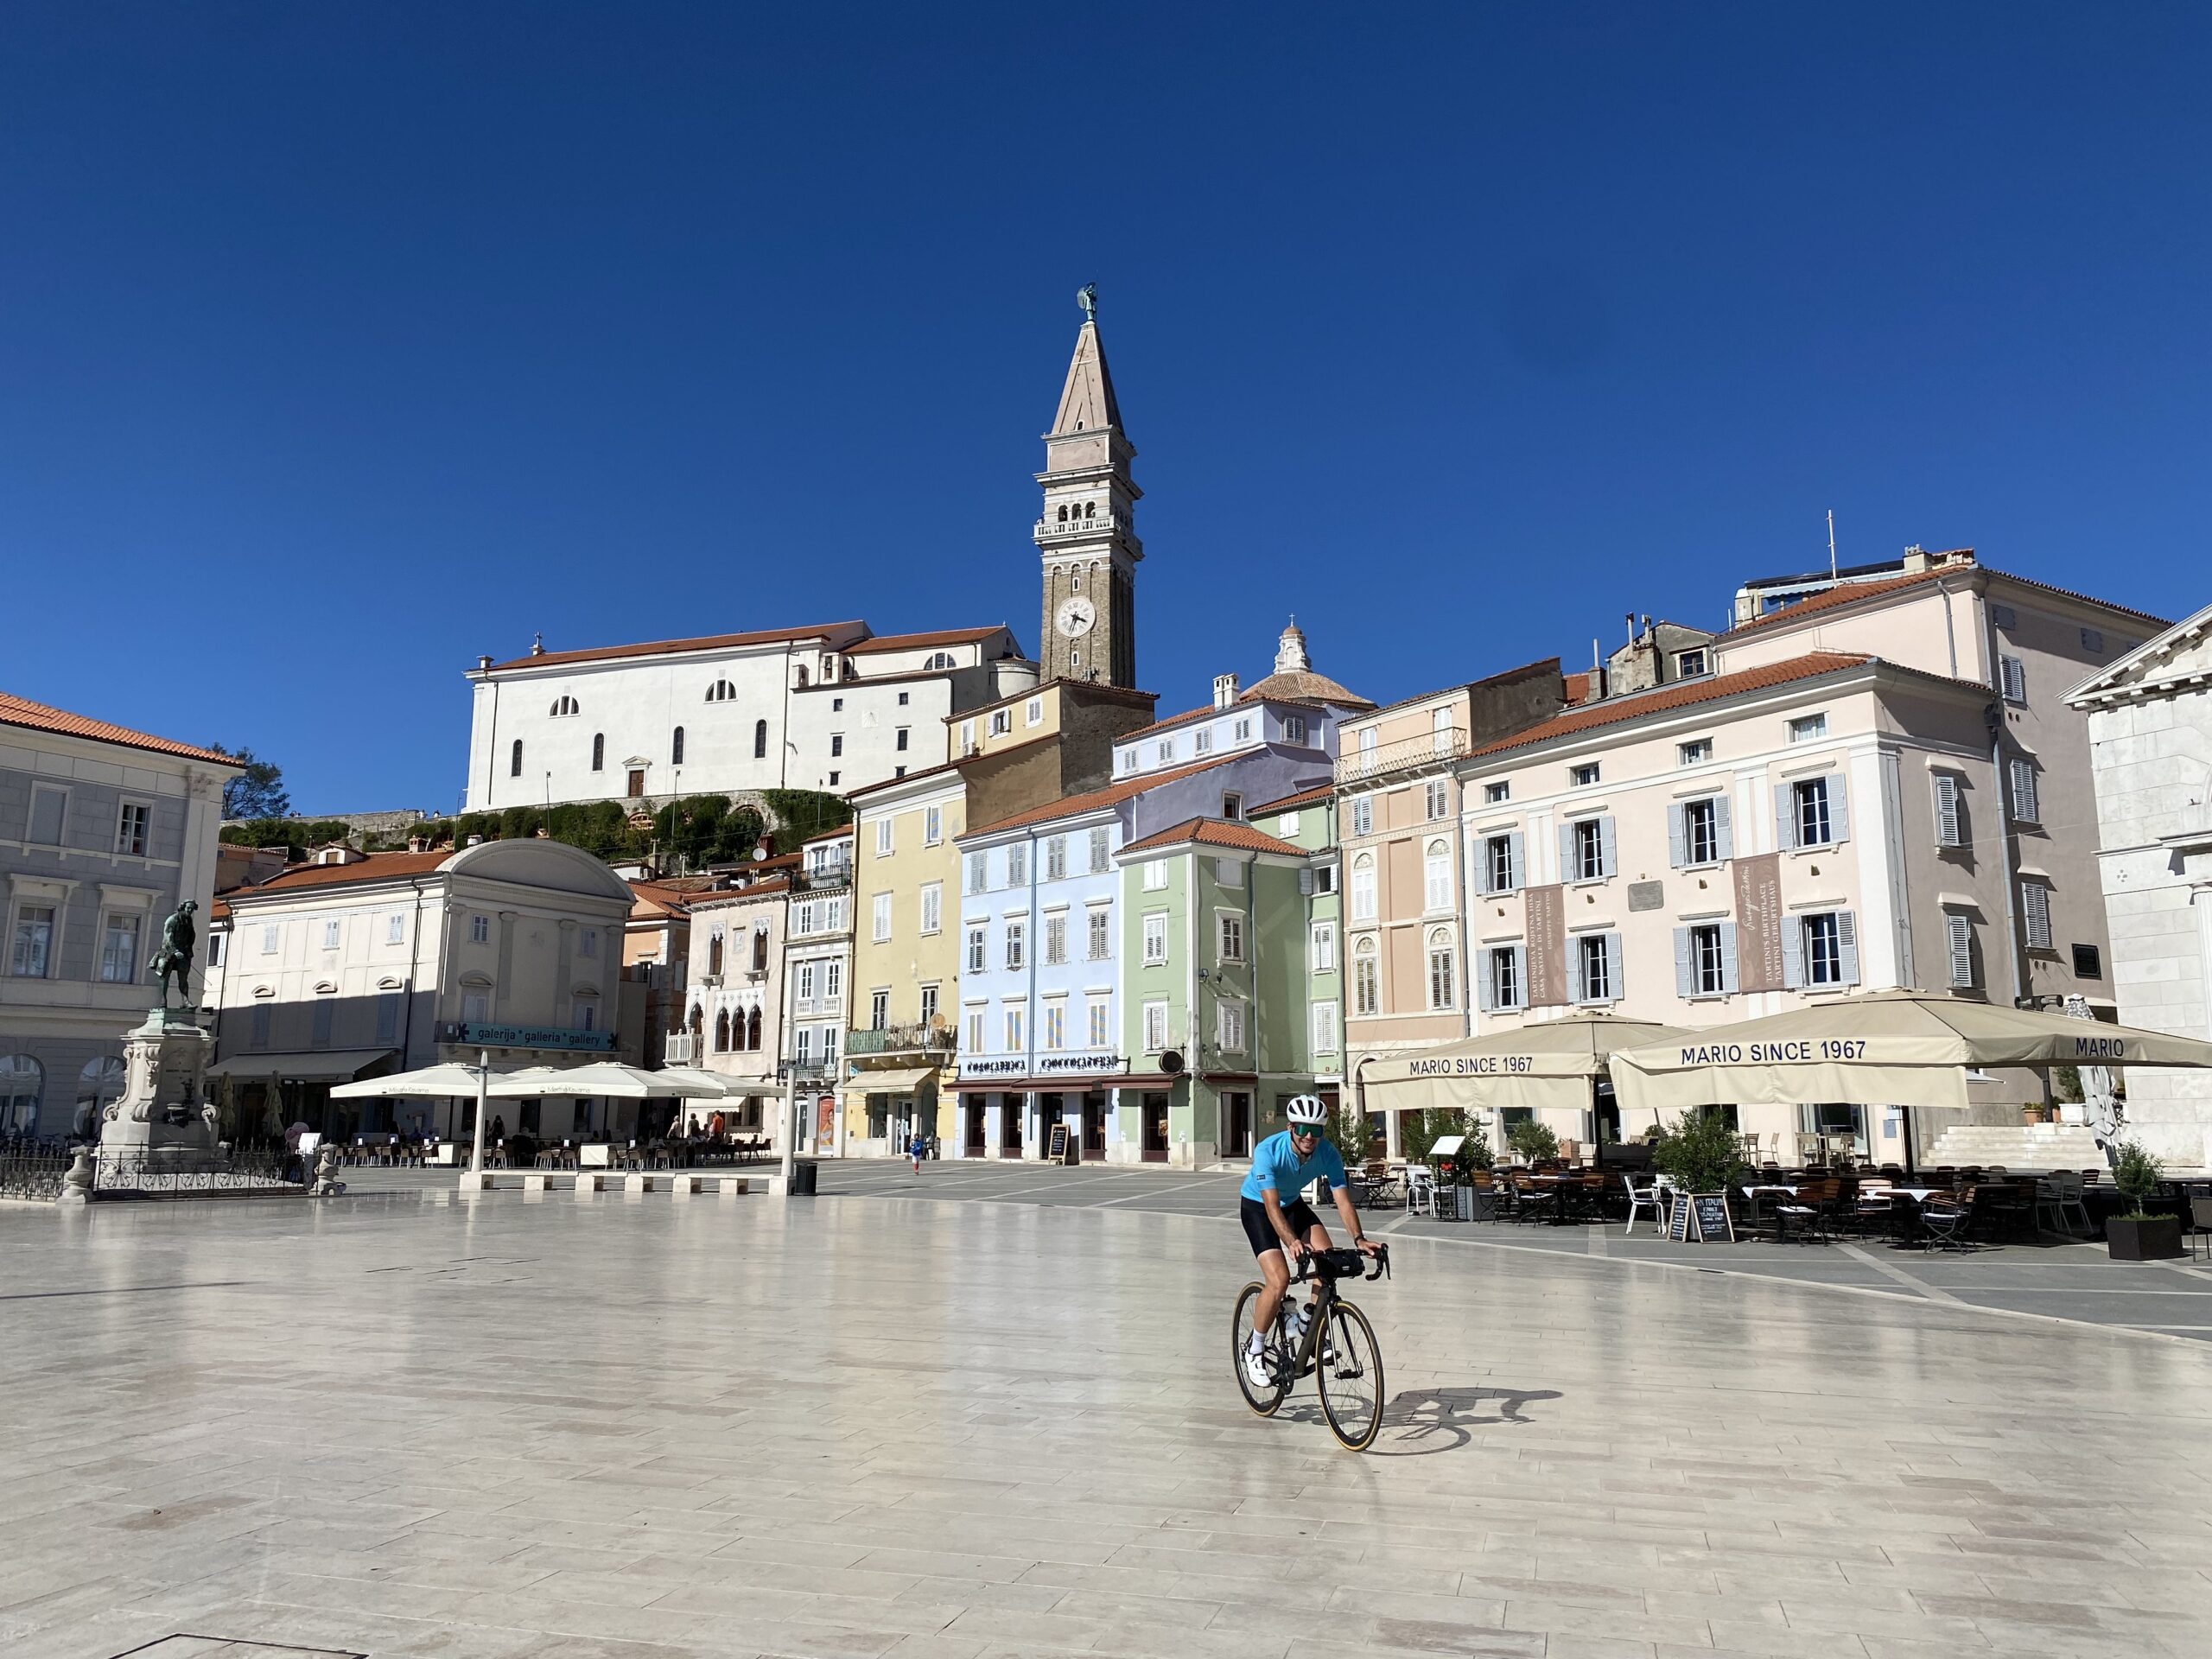 Pedal through Slovenia's most beautiful town, Piran